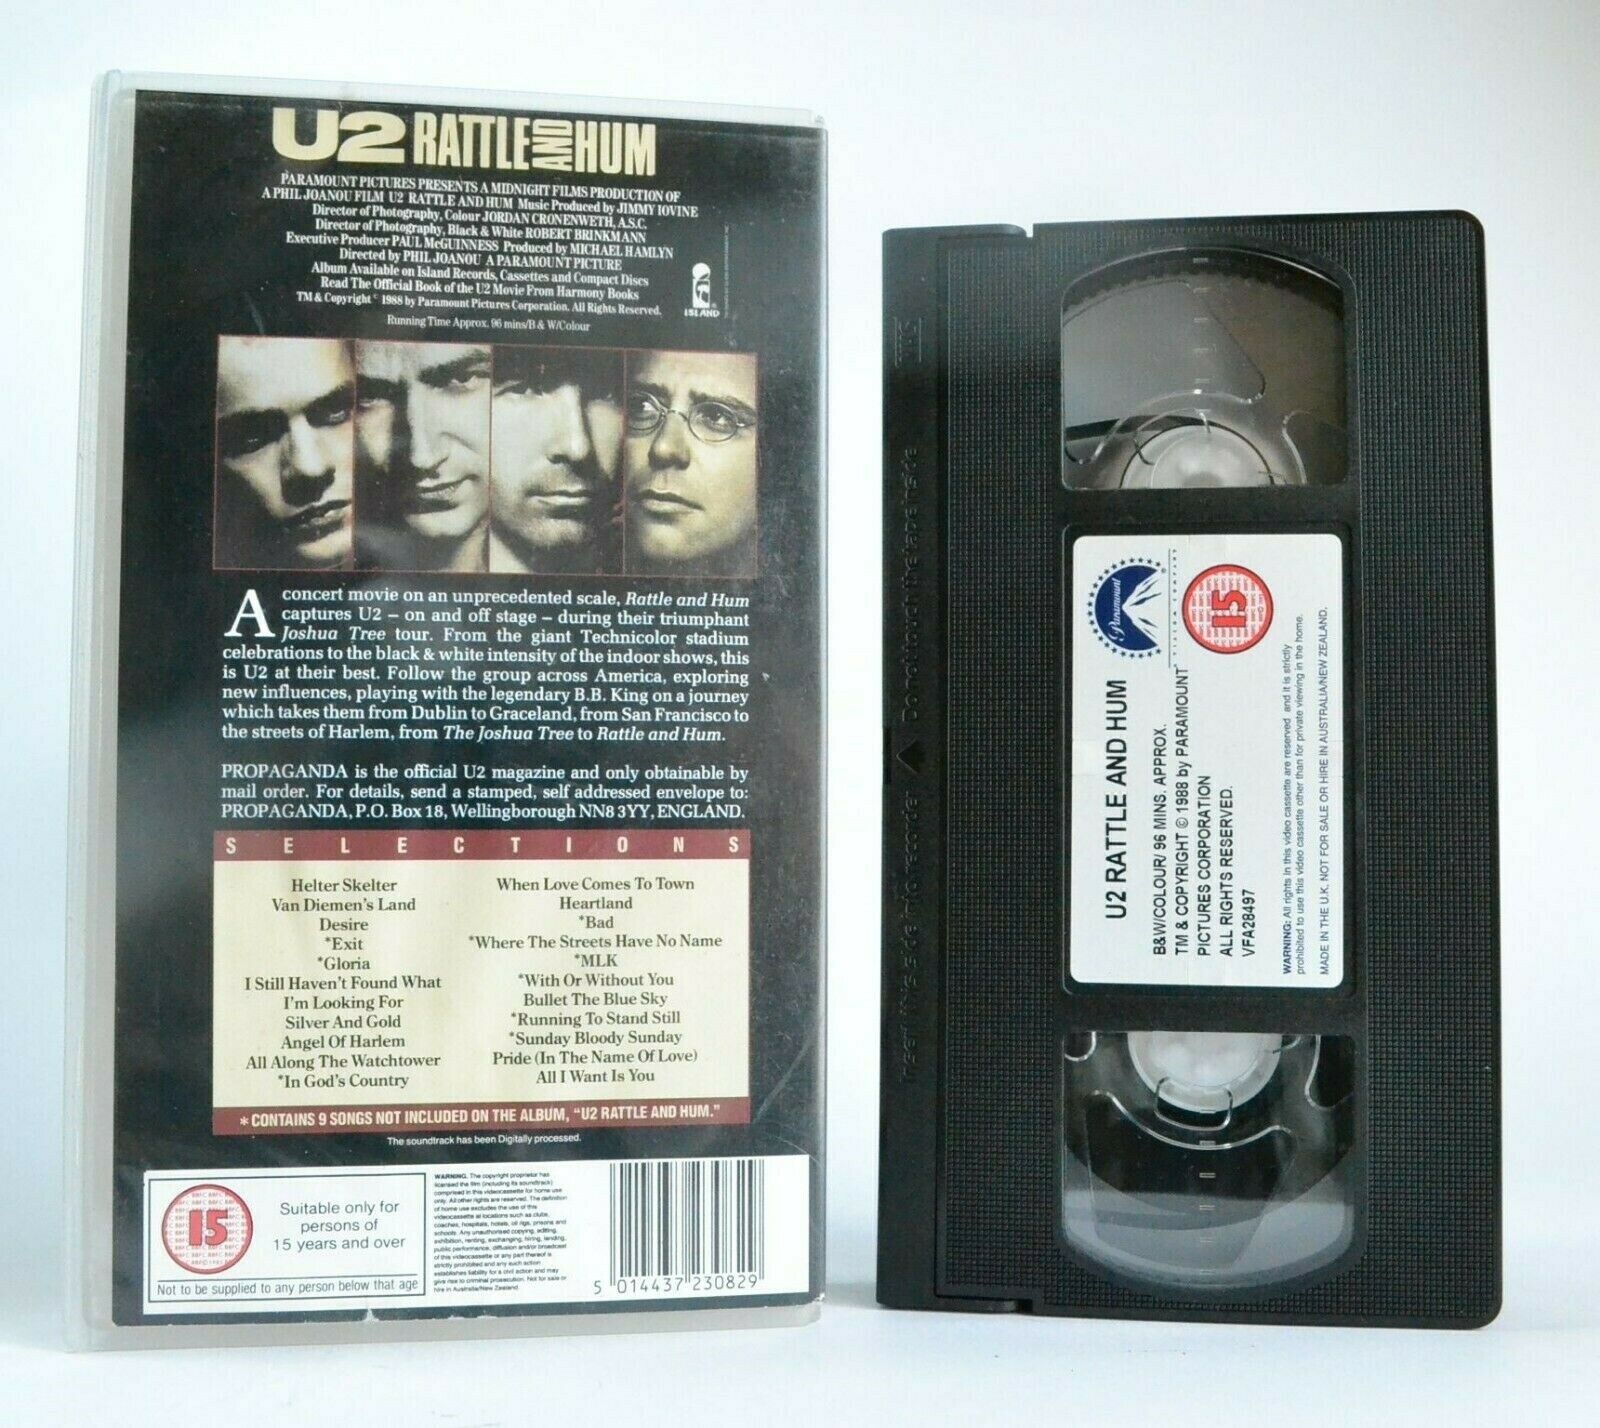 U2: Rattle And Hum - Bono - The Edge - Adam Clayton - Larry Mullen - Music - VHS-